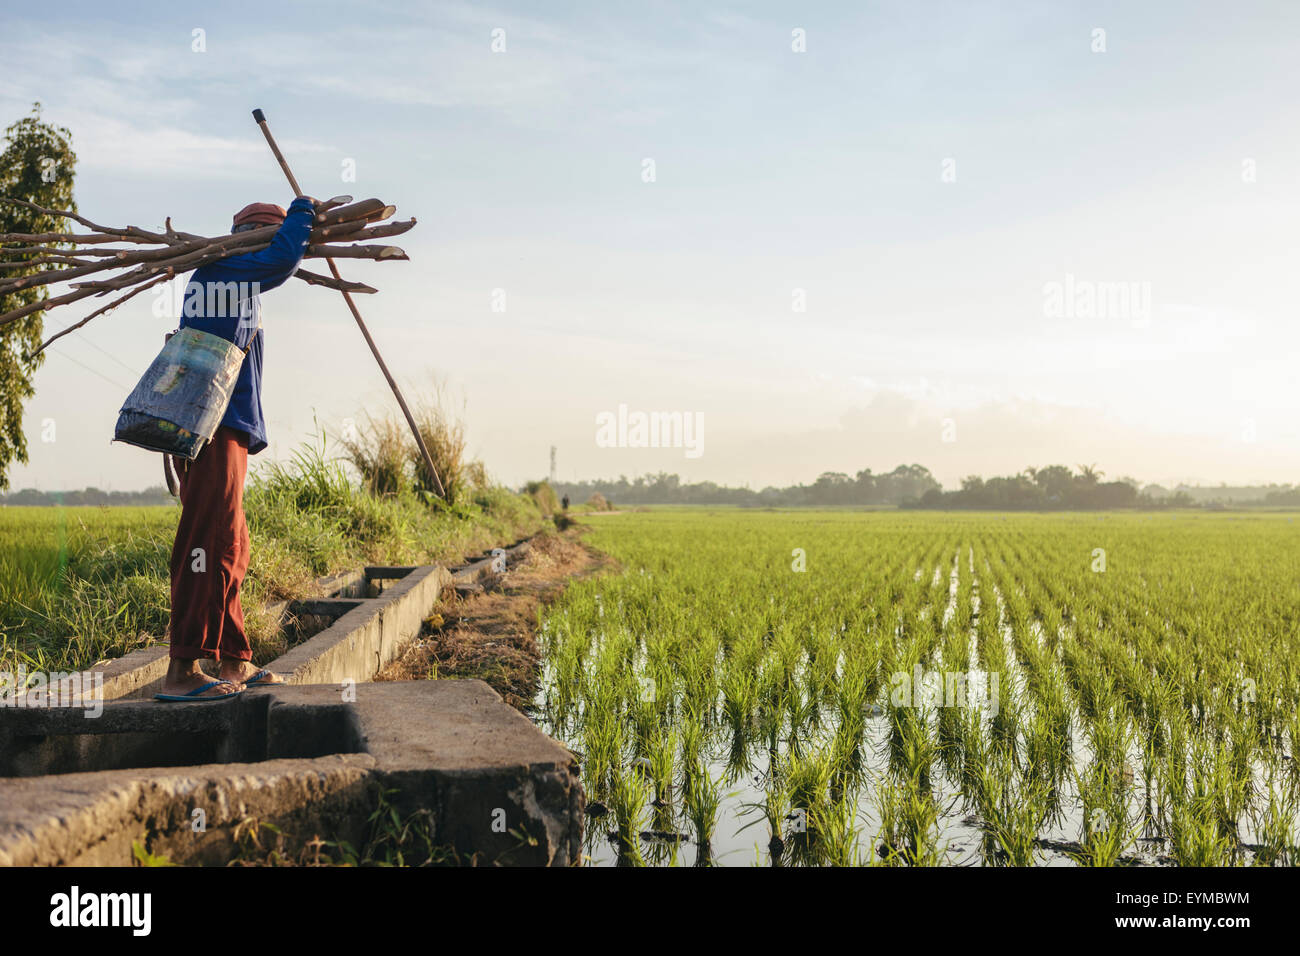 Farmer in rice field Stock Photo